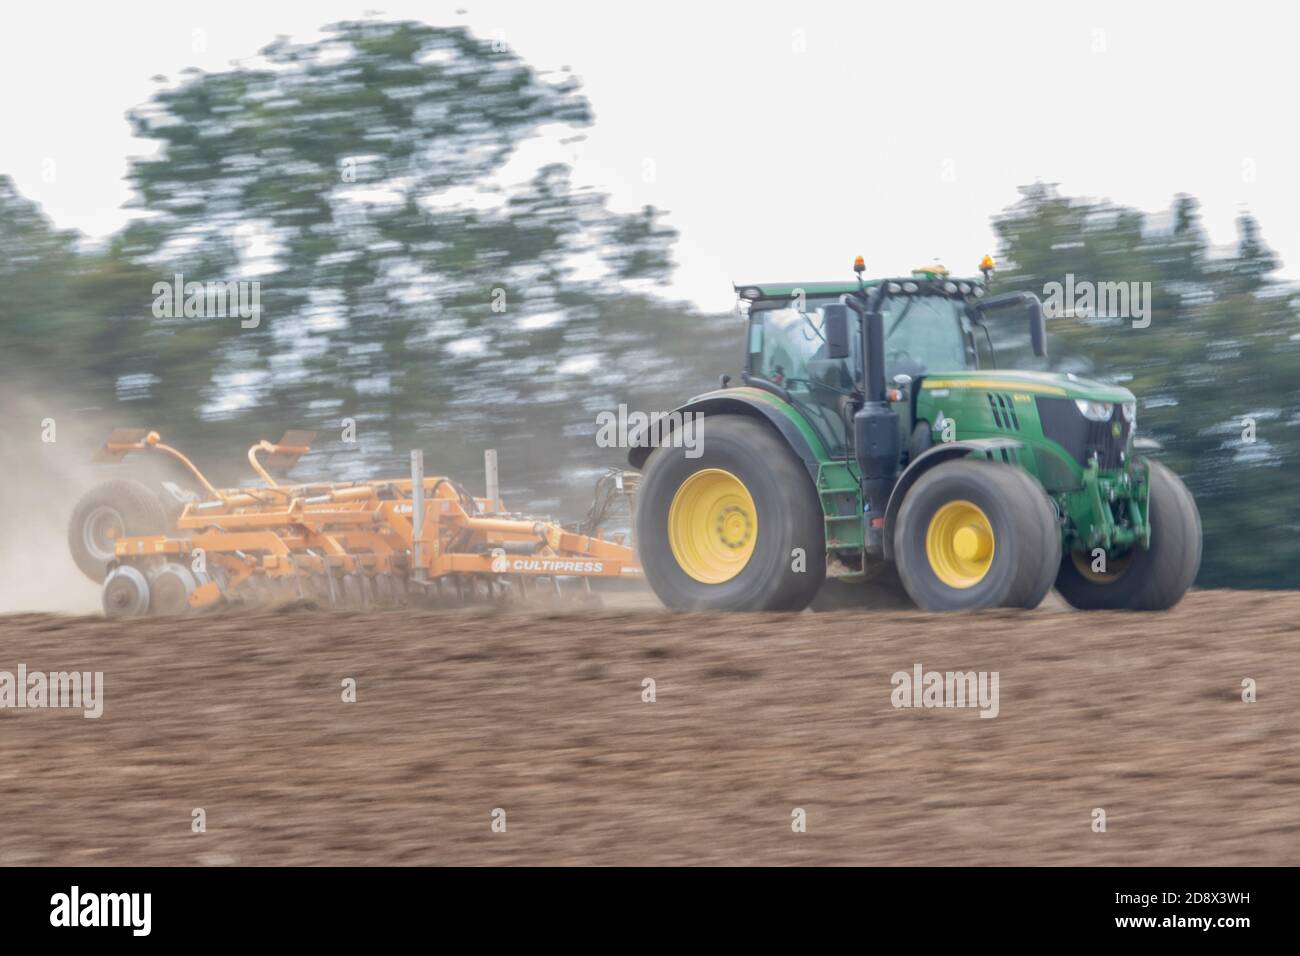 John Deere 625R tractor cultivating field Stock Photo